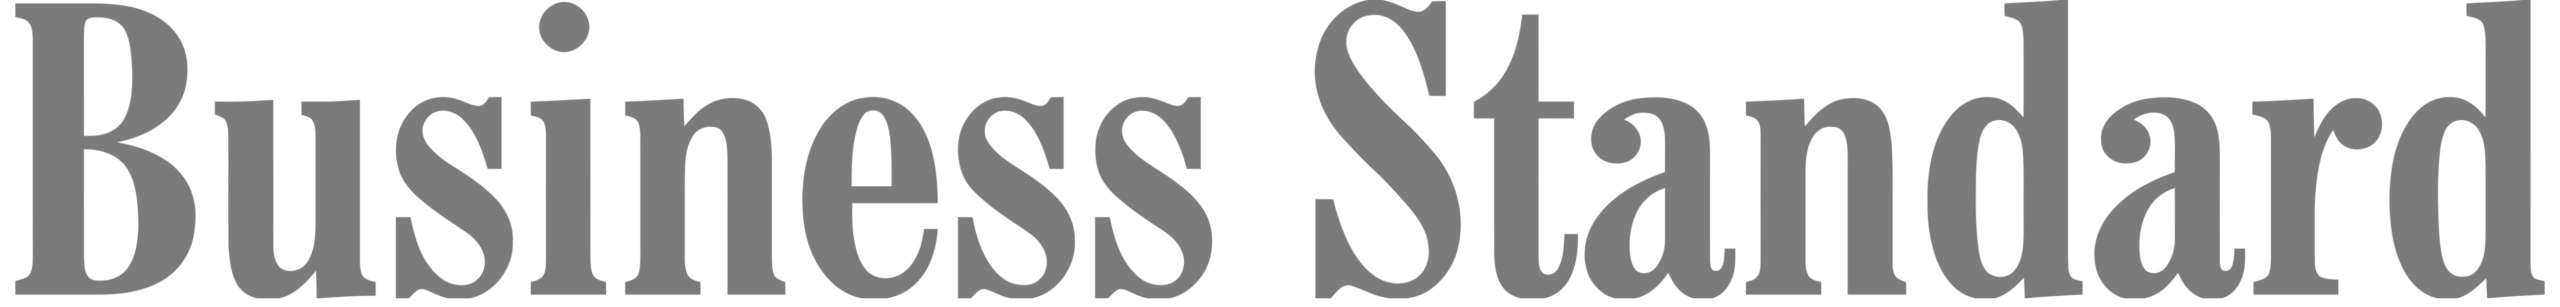 Business Standard Logo Bw